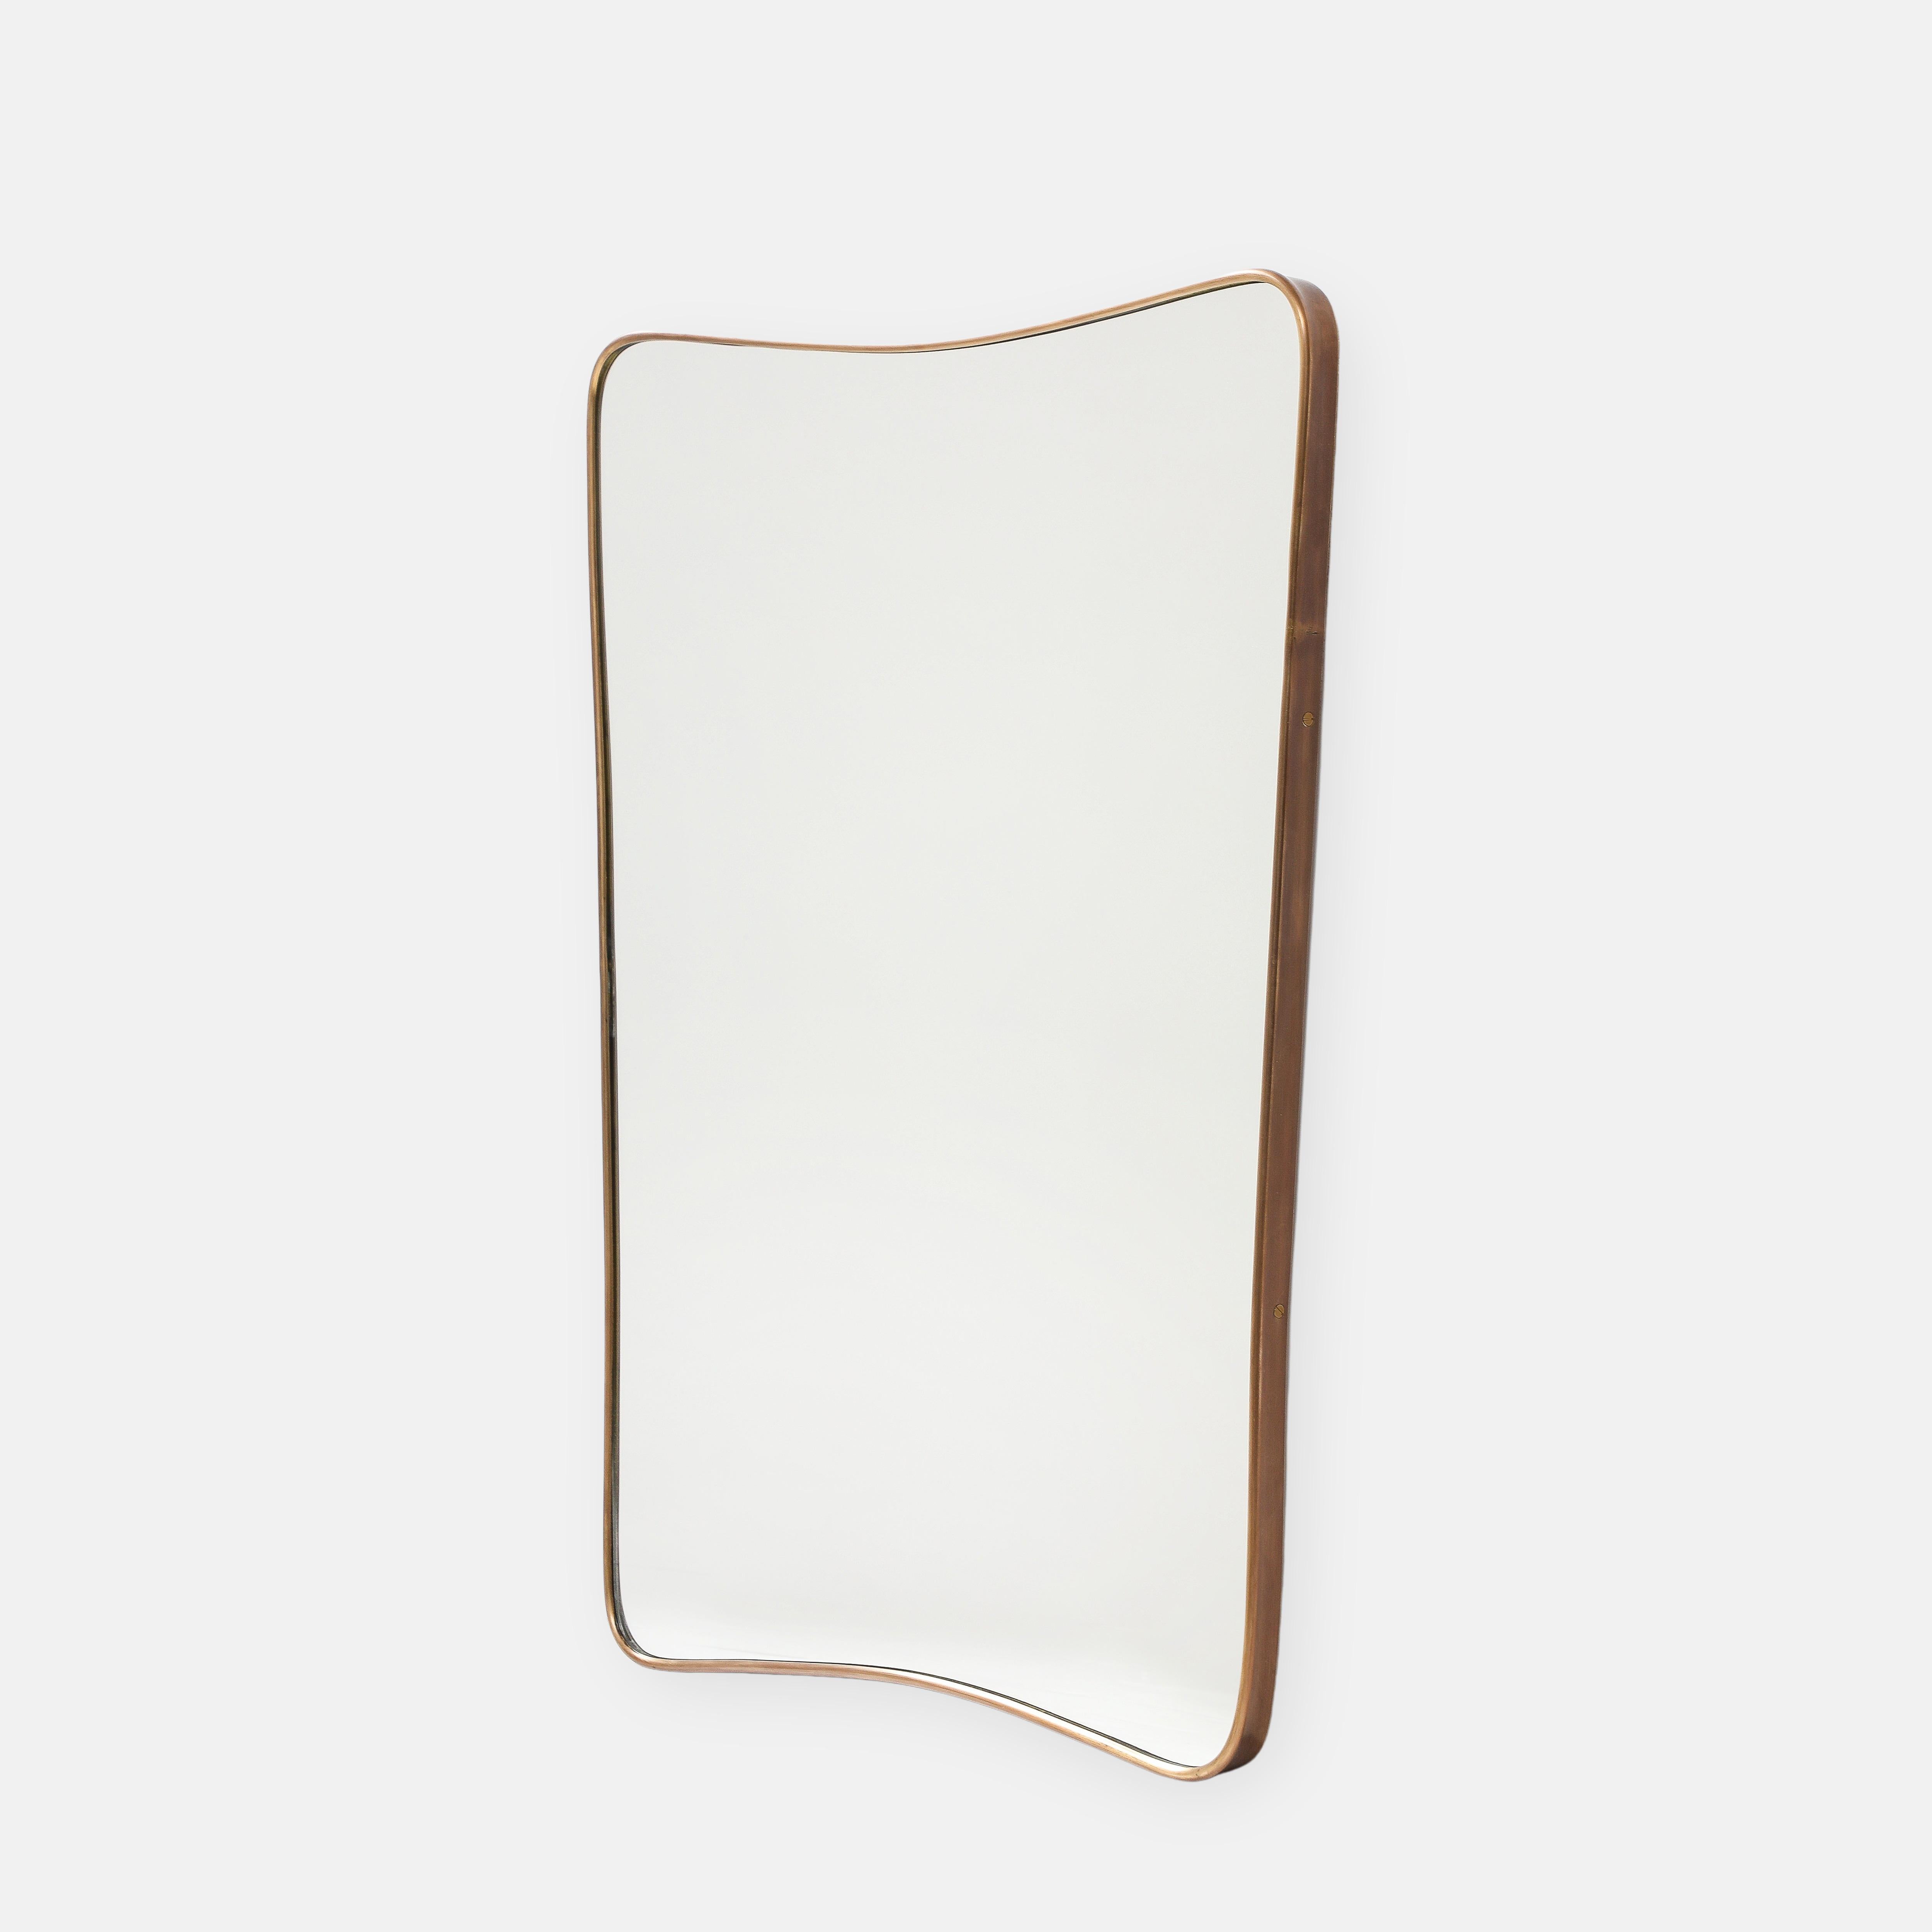 Mid-Century Modern Midcentury Italian Modernist Shaped Brass Mirrors, 1950s For Sale